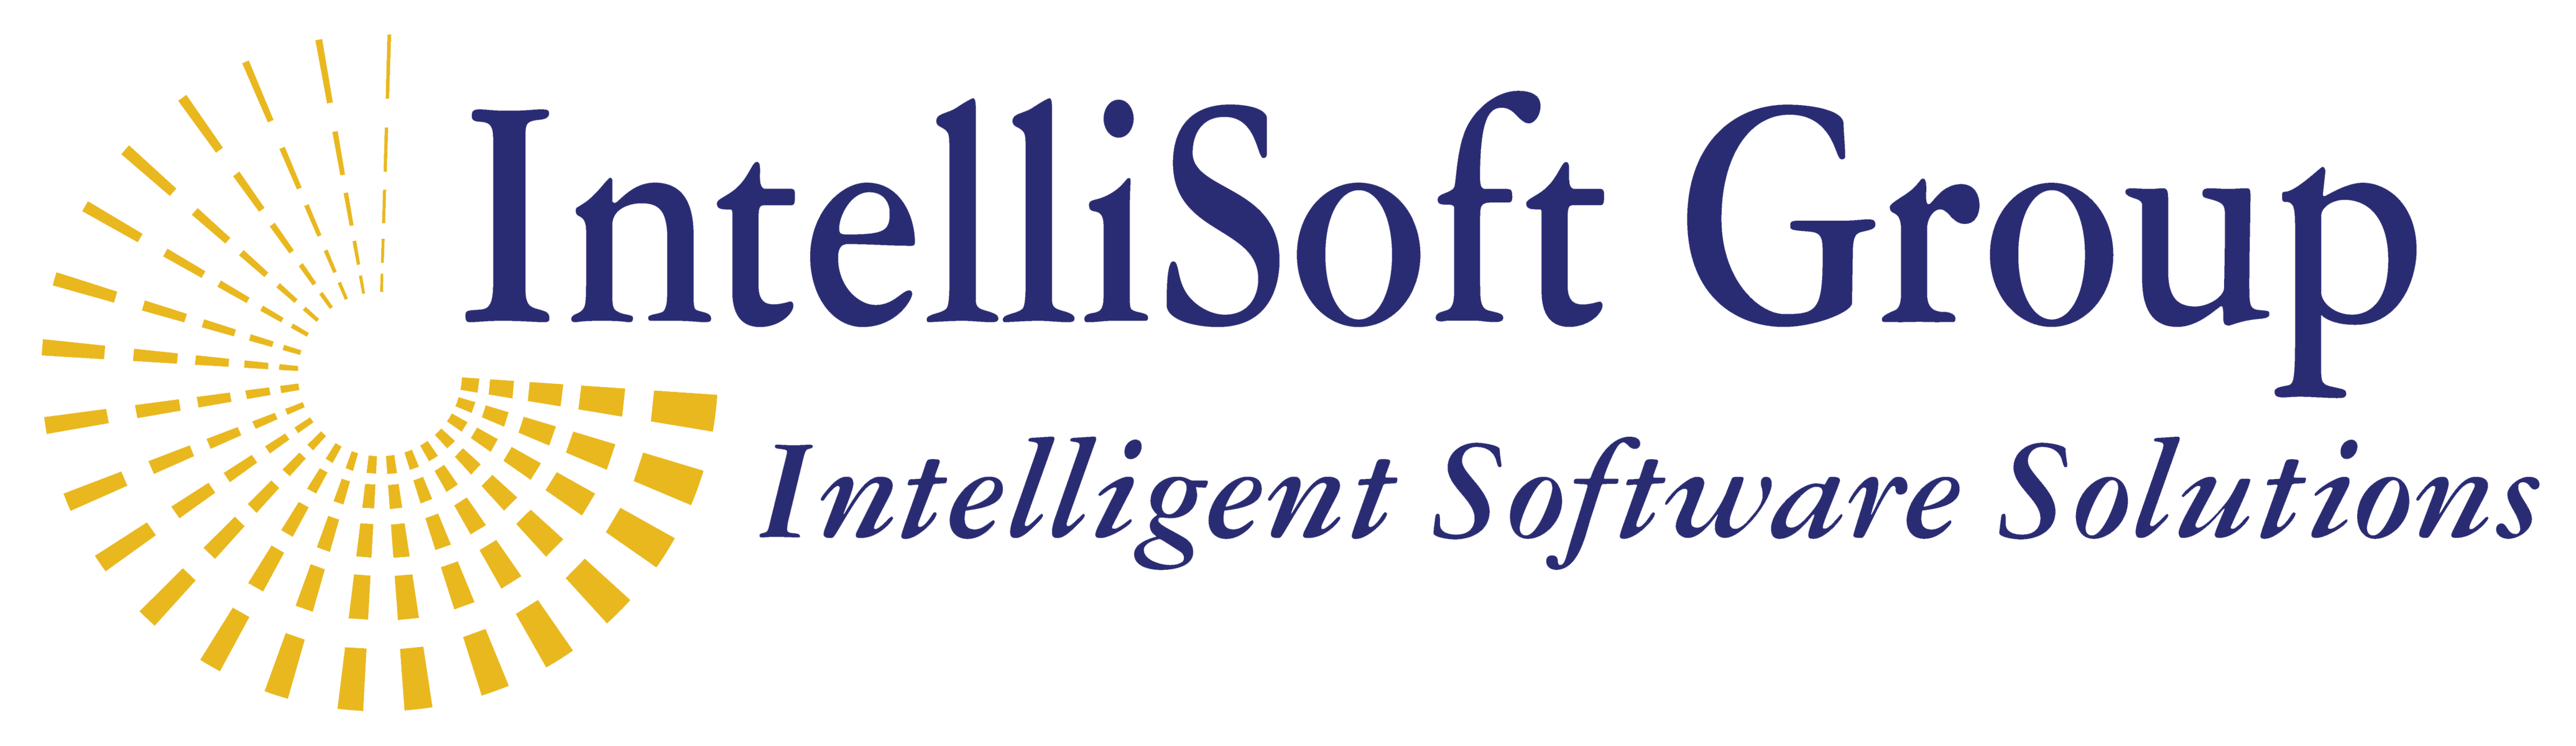 IntelliSoft Logo photo - 1